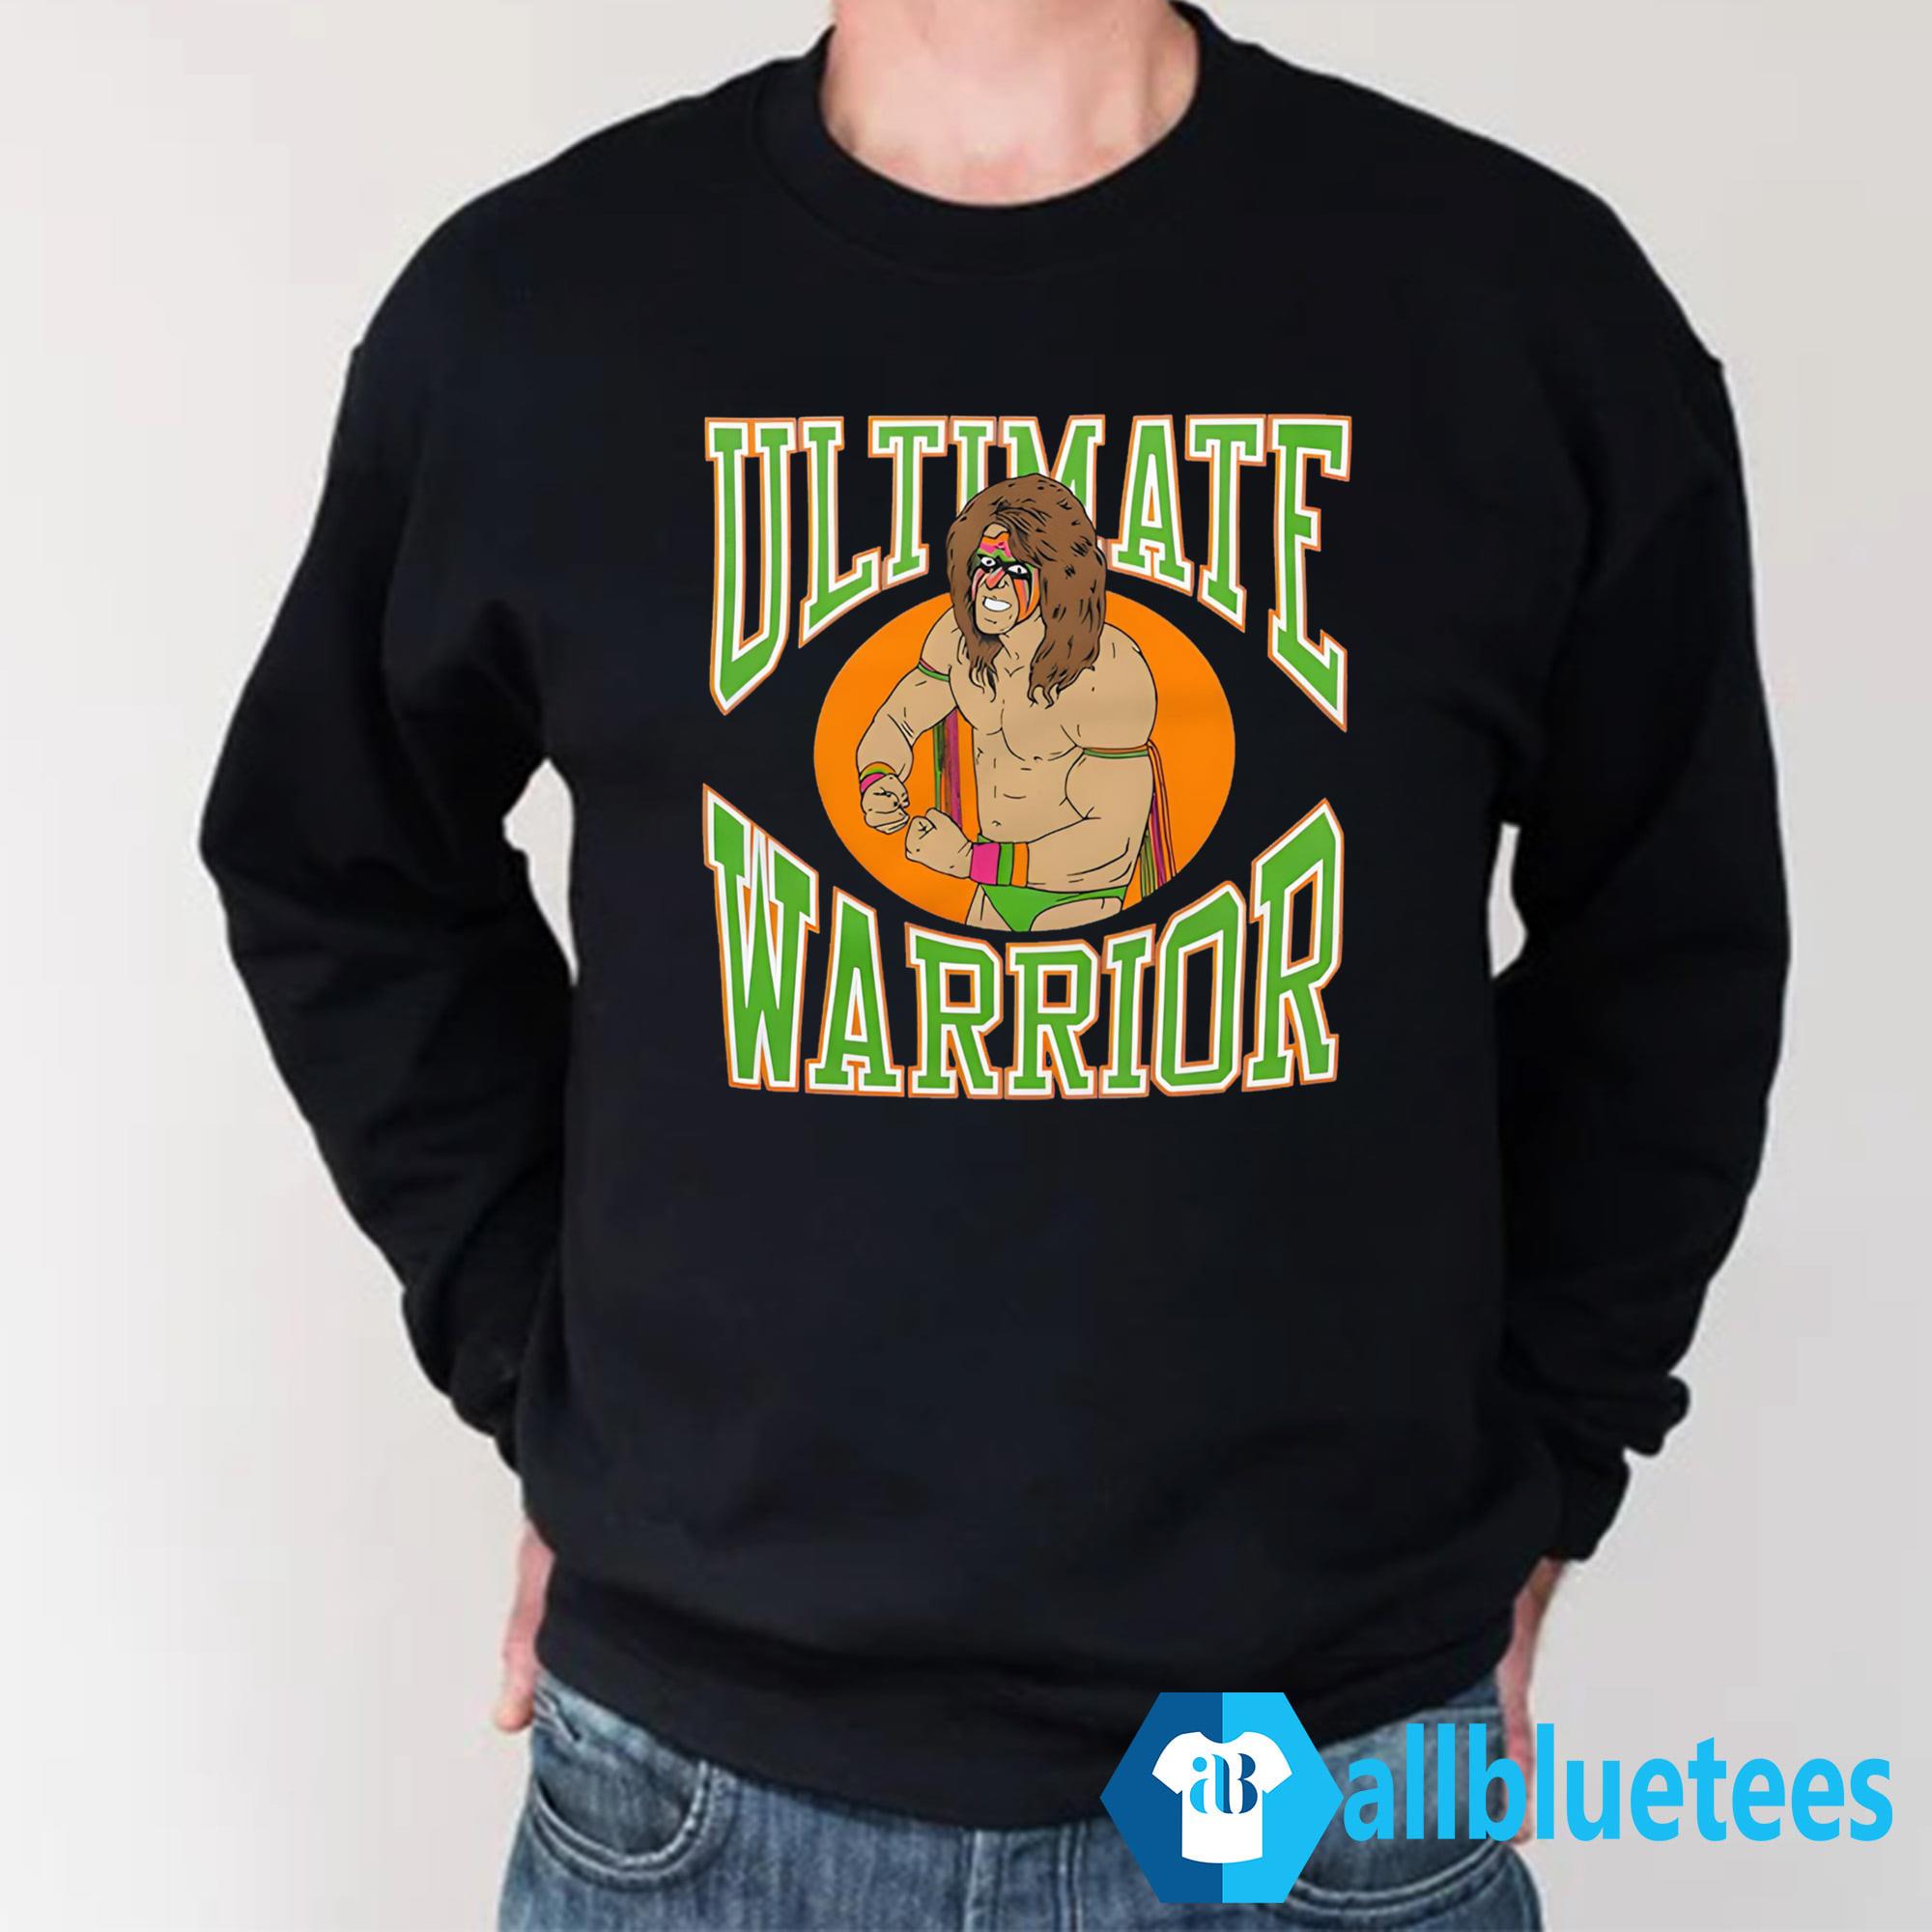 GV art & design Lebron James Ultimate Warrior T Shirt Size L